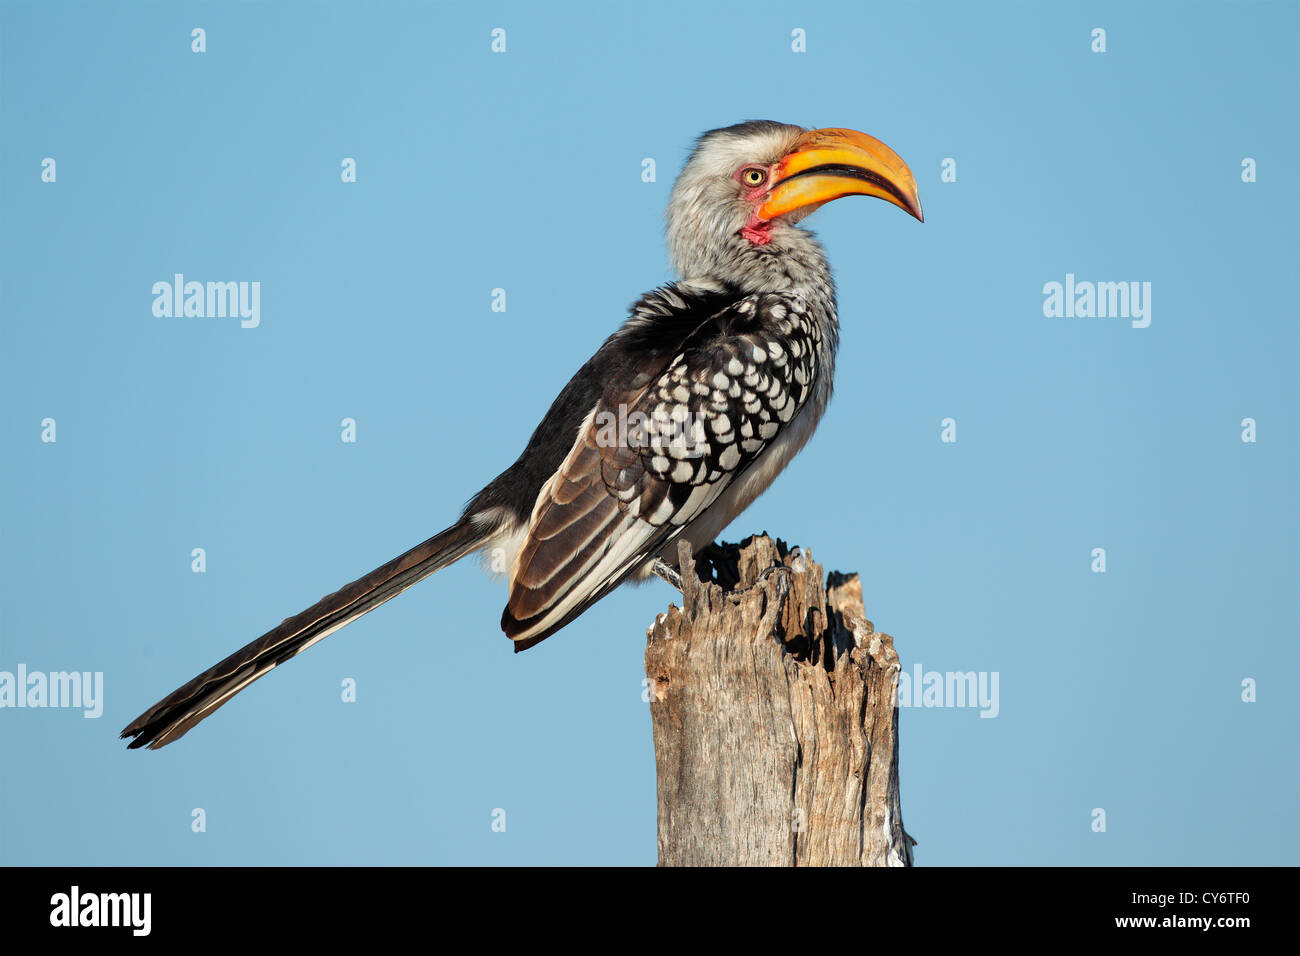 Yellow-billed hornbill (Tockus flavirostris) sitting on a tree stump, southern Africa Stock Photo